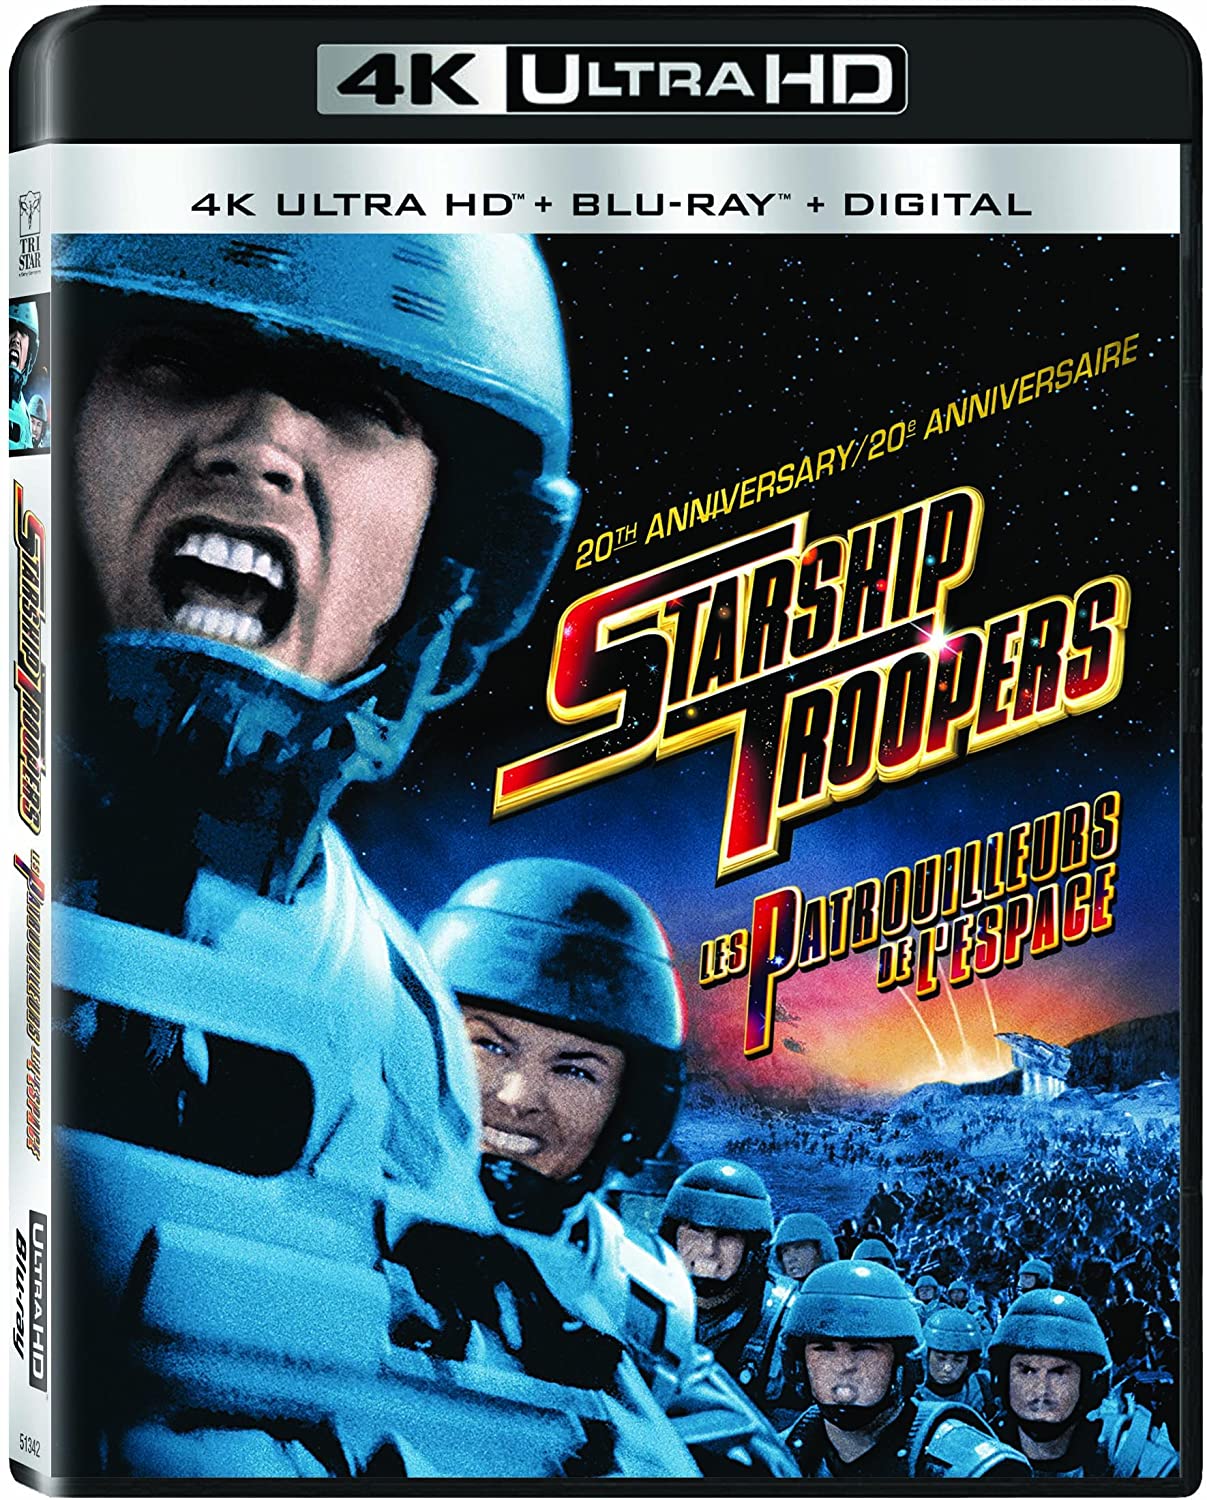 Starship Troopers - 4K UHD  Blu-ray  Digital